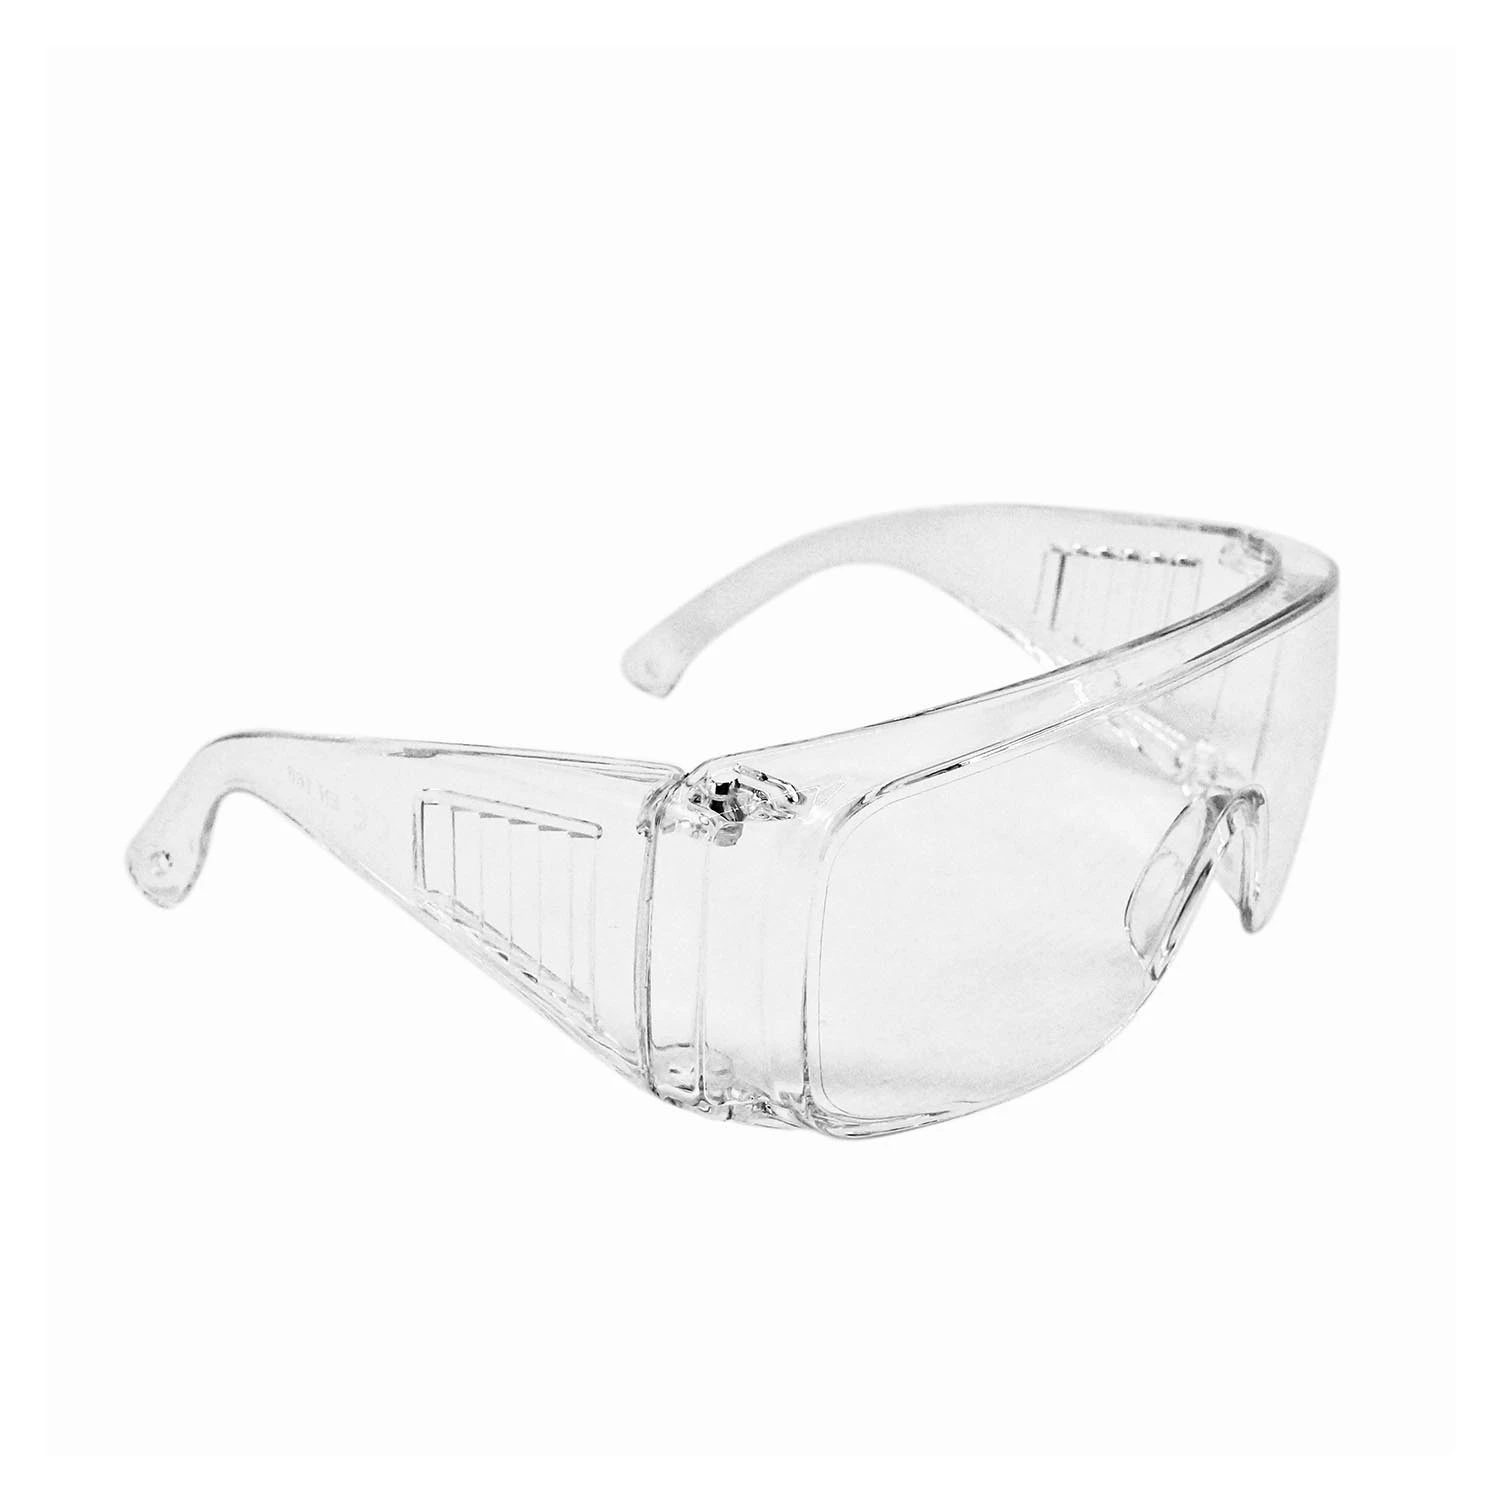 Protective glasses Eyewear Anti Splash Anti Fog Medical clear goggles